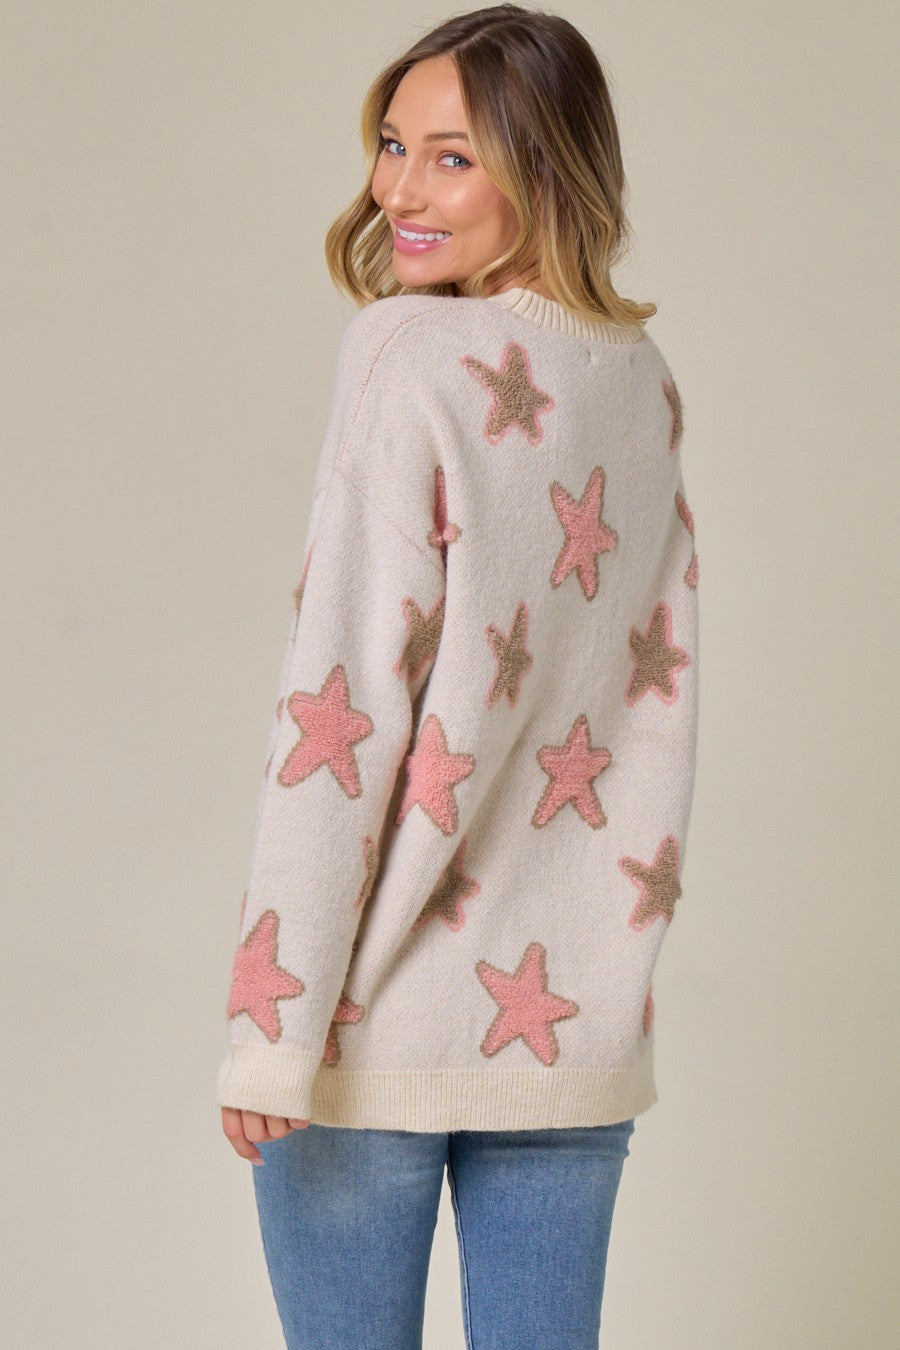 Women's Long Sleeve Crew Neck Star Printed Tunic Sweater